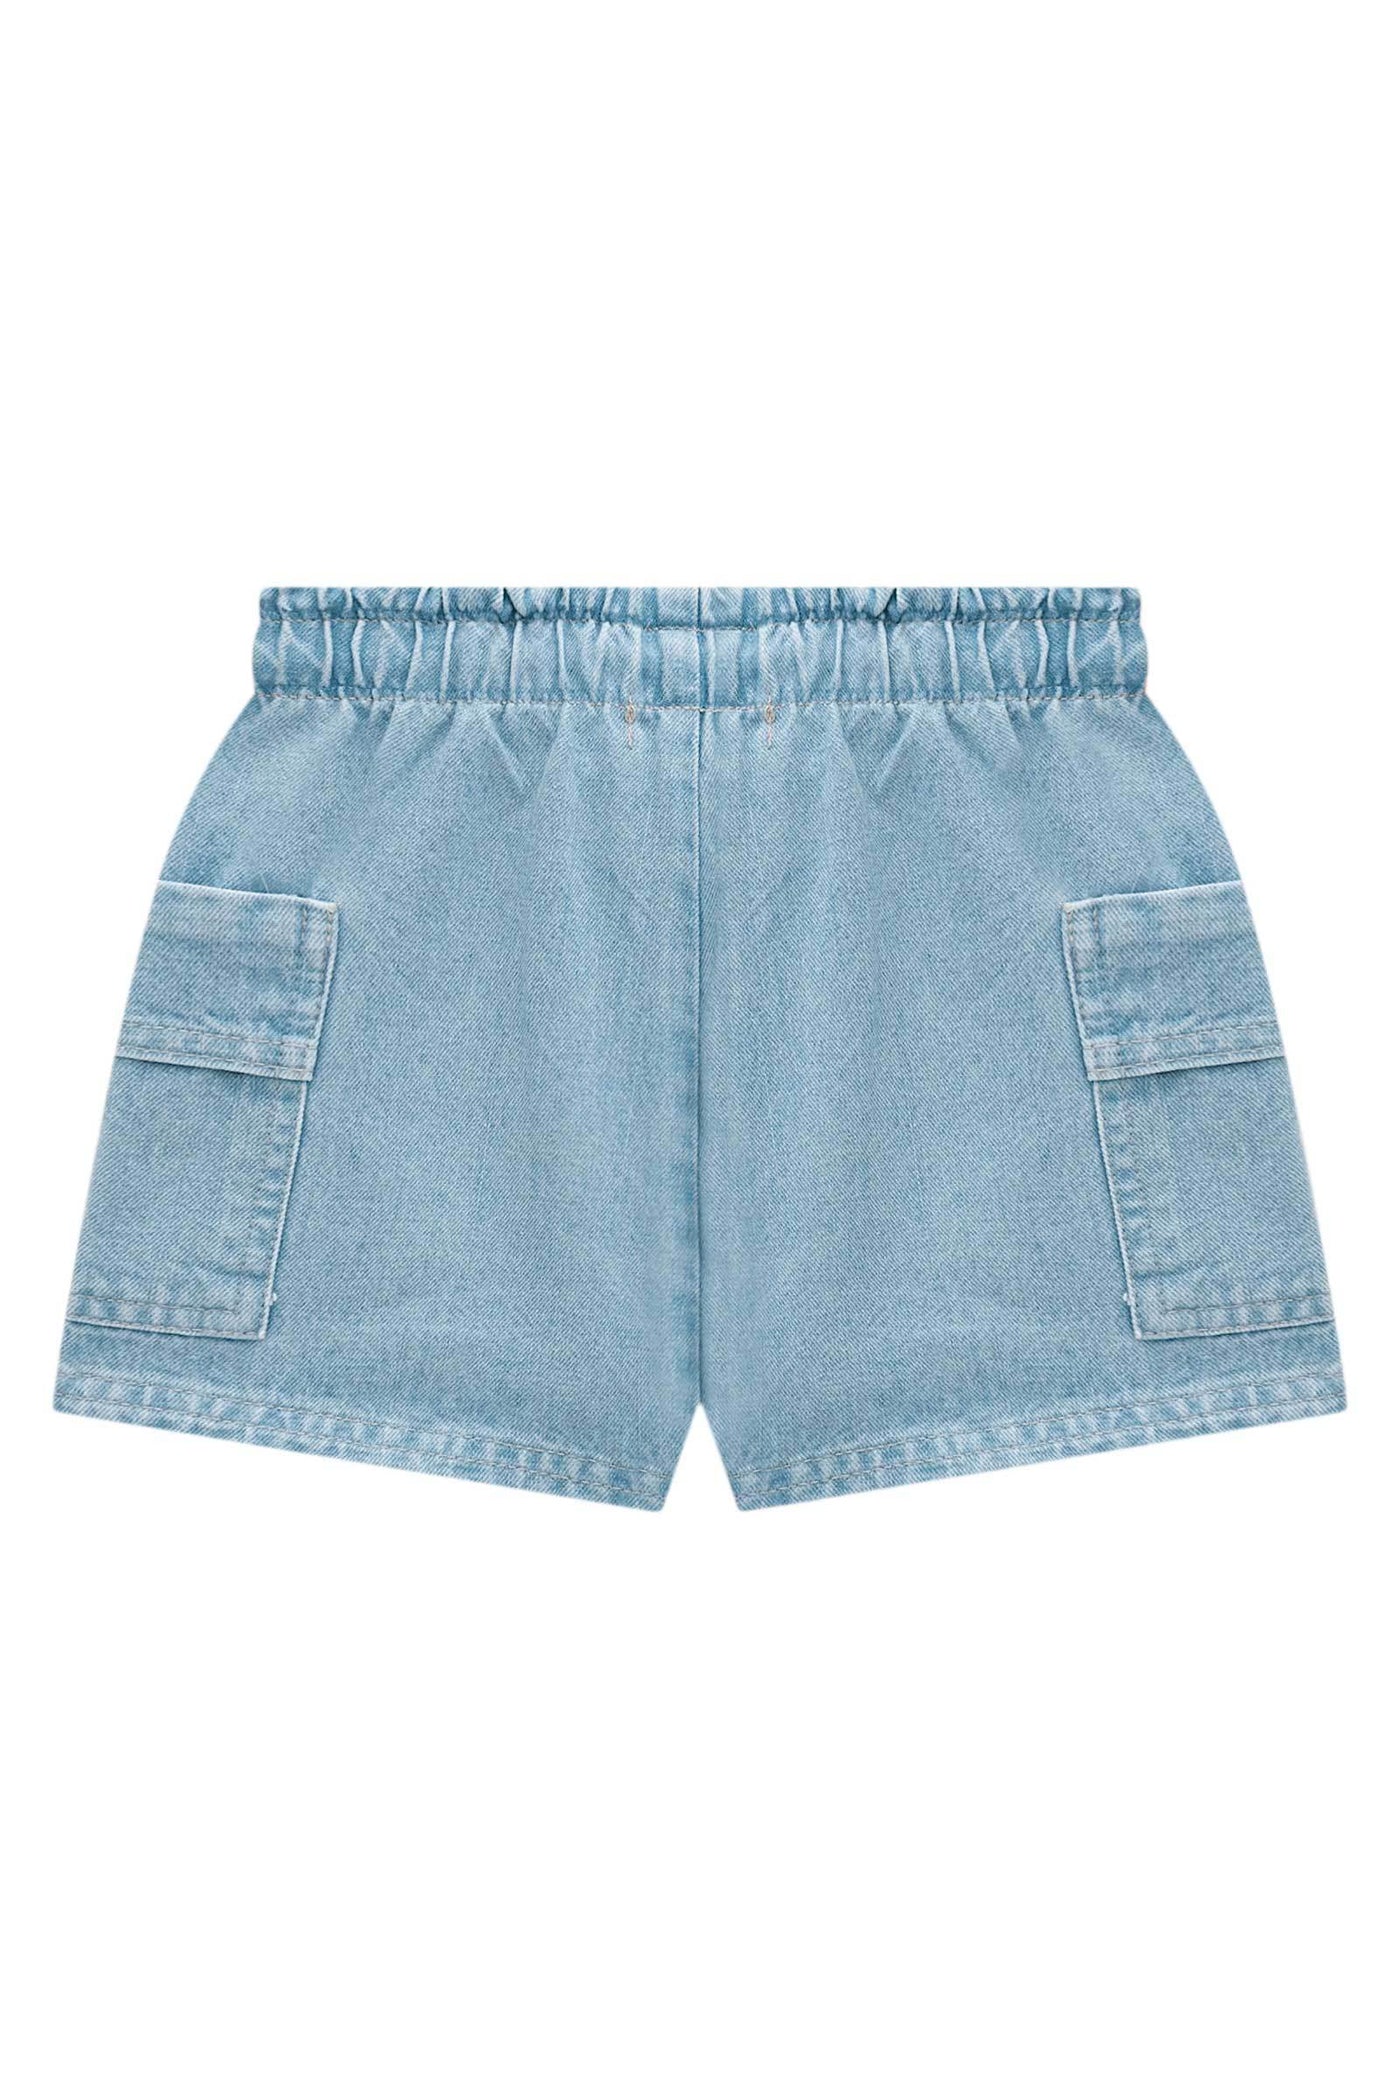 Shorts em Jeans Arkansas 76089 Kukiê